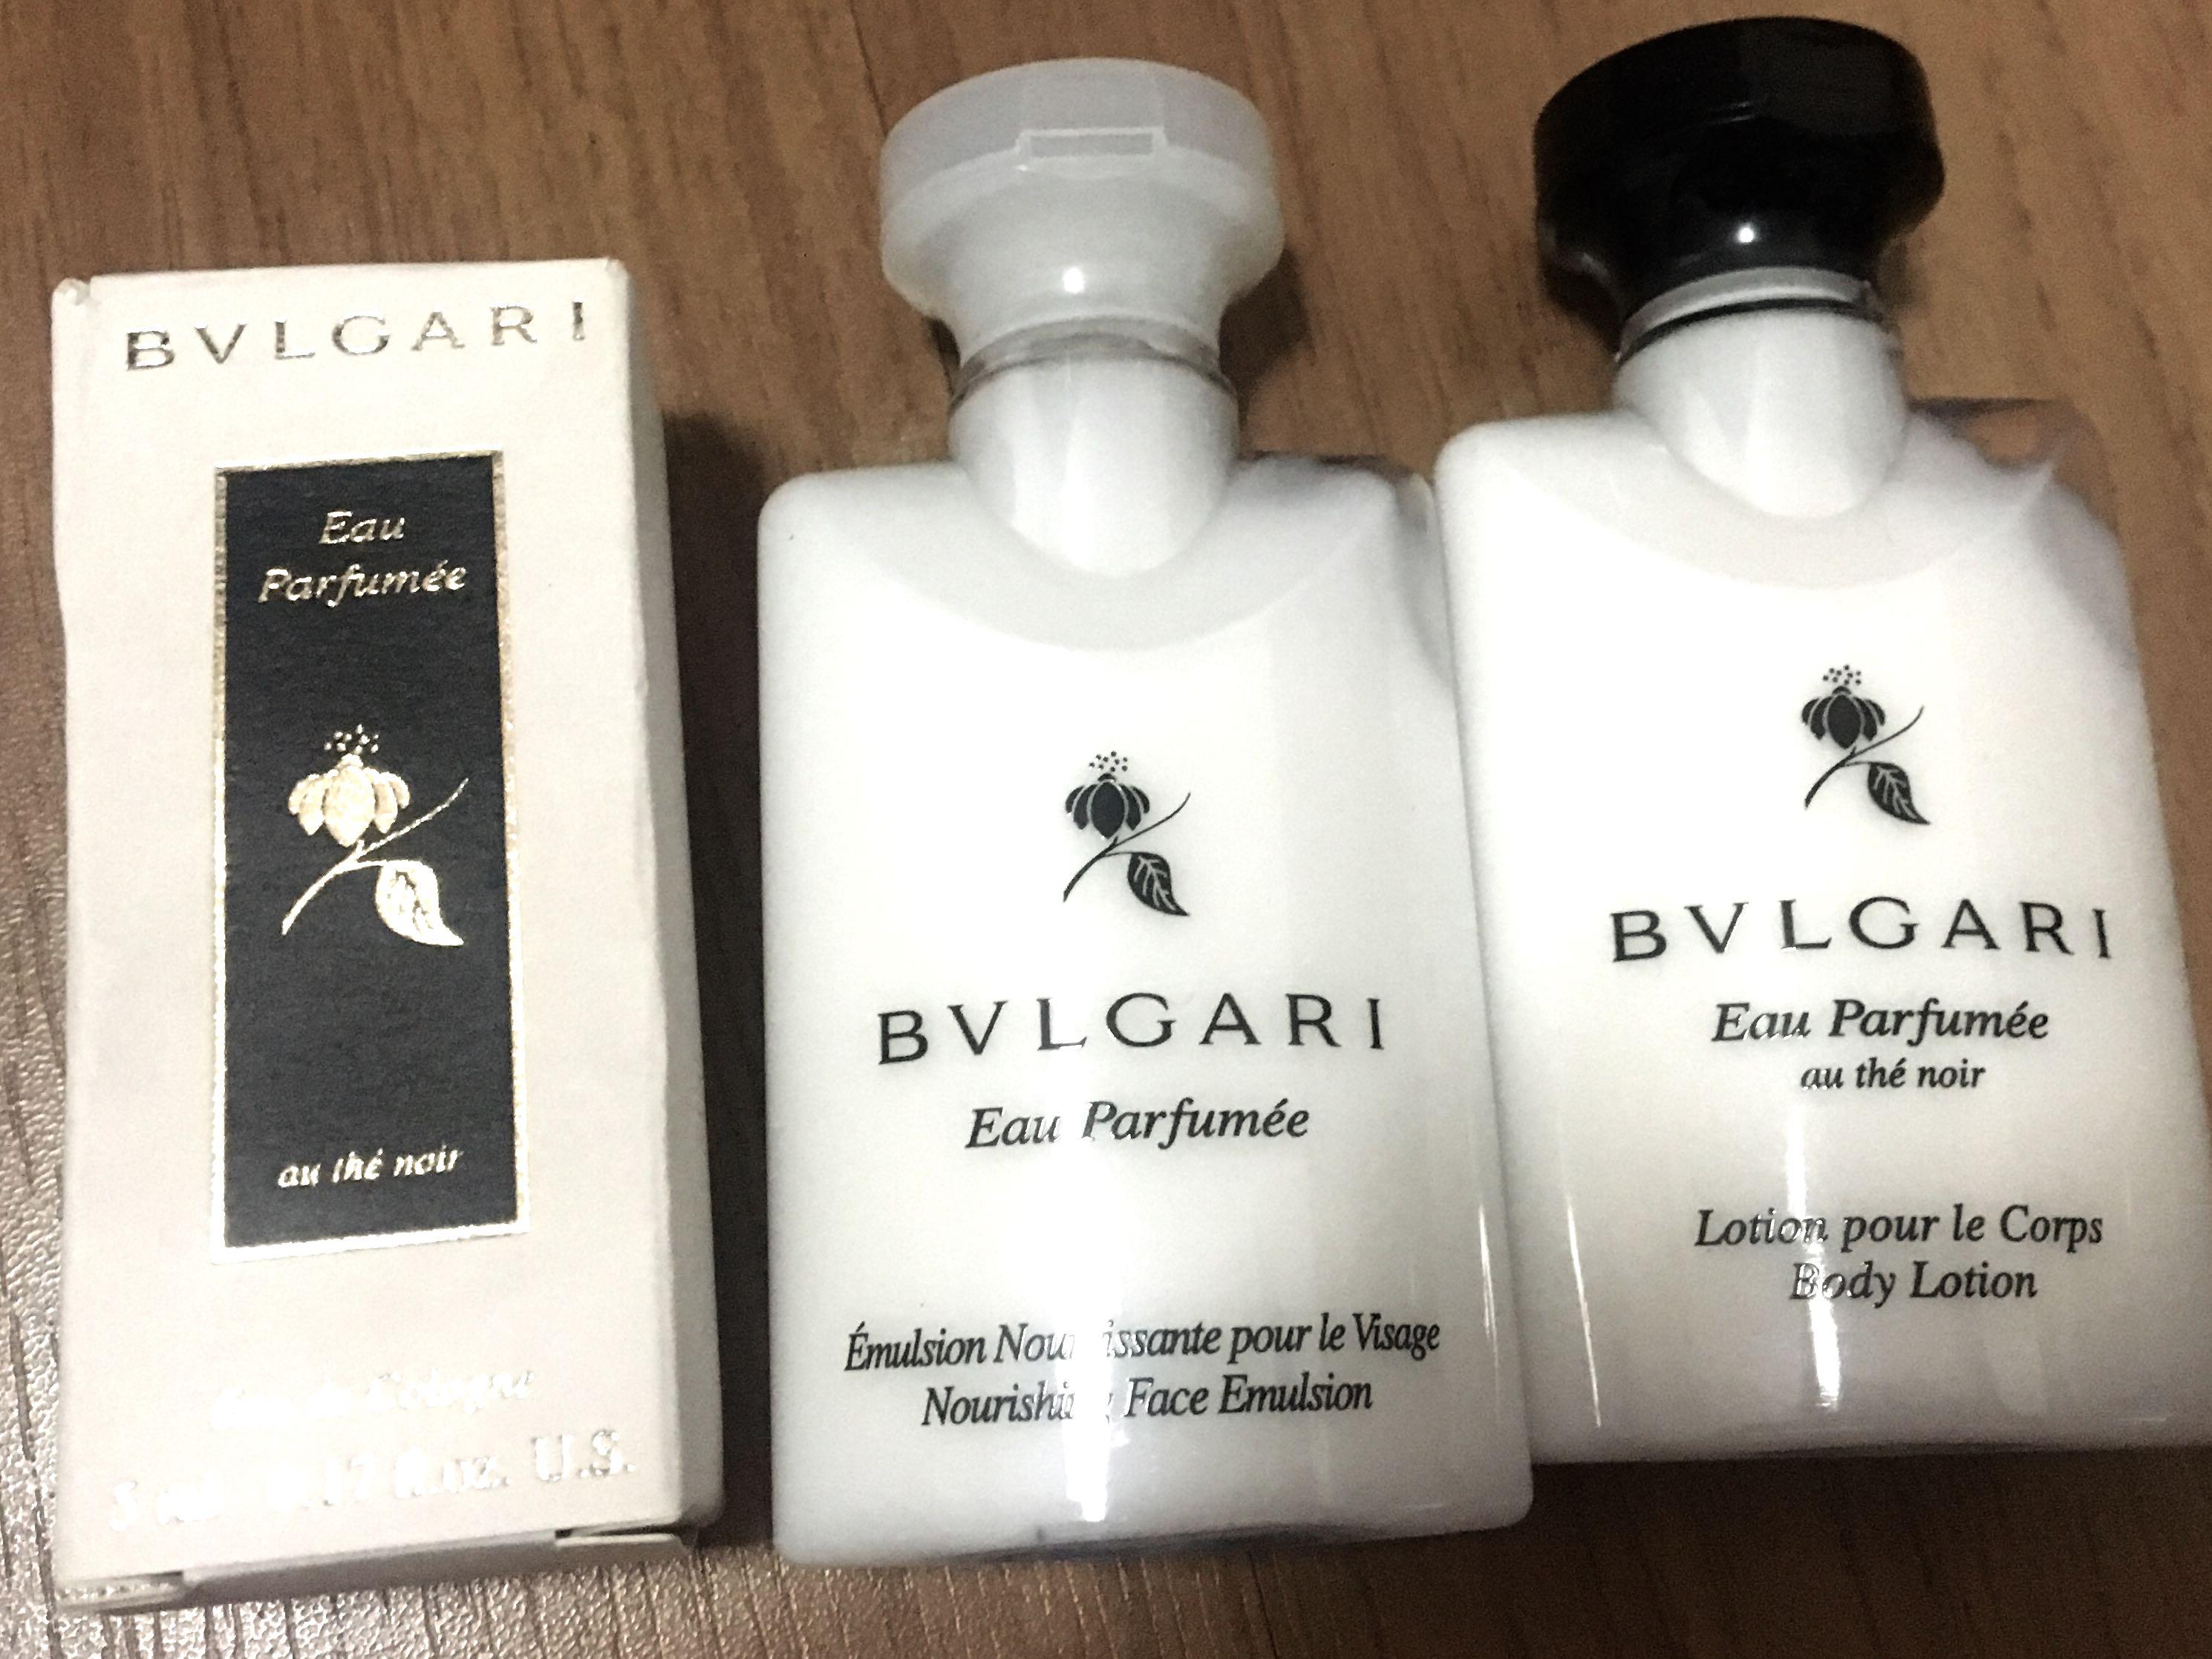 bvlgari nourishing face emulsion price